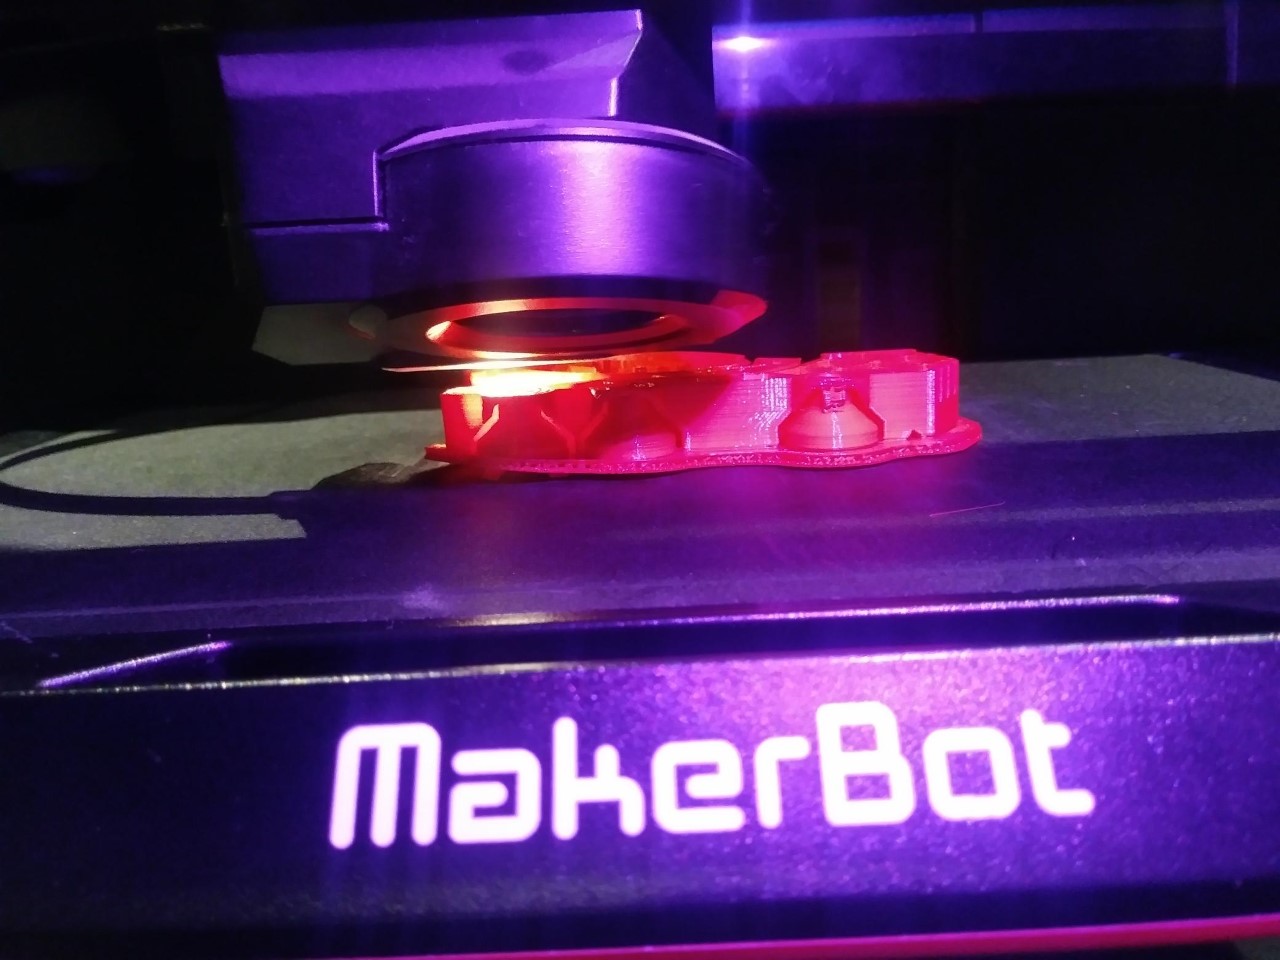 Image of a purple MakerBot 3D printer